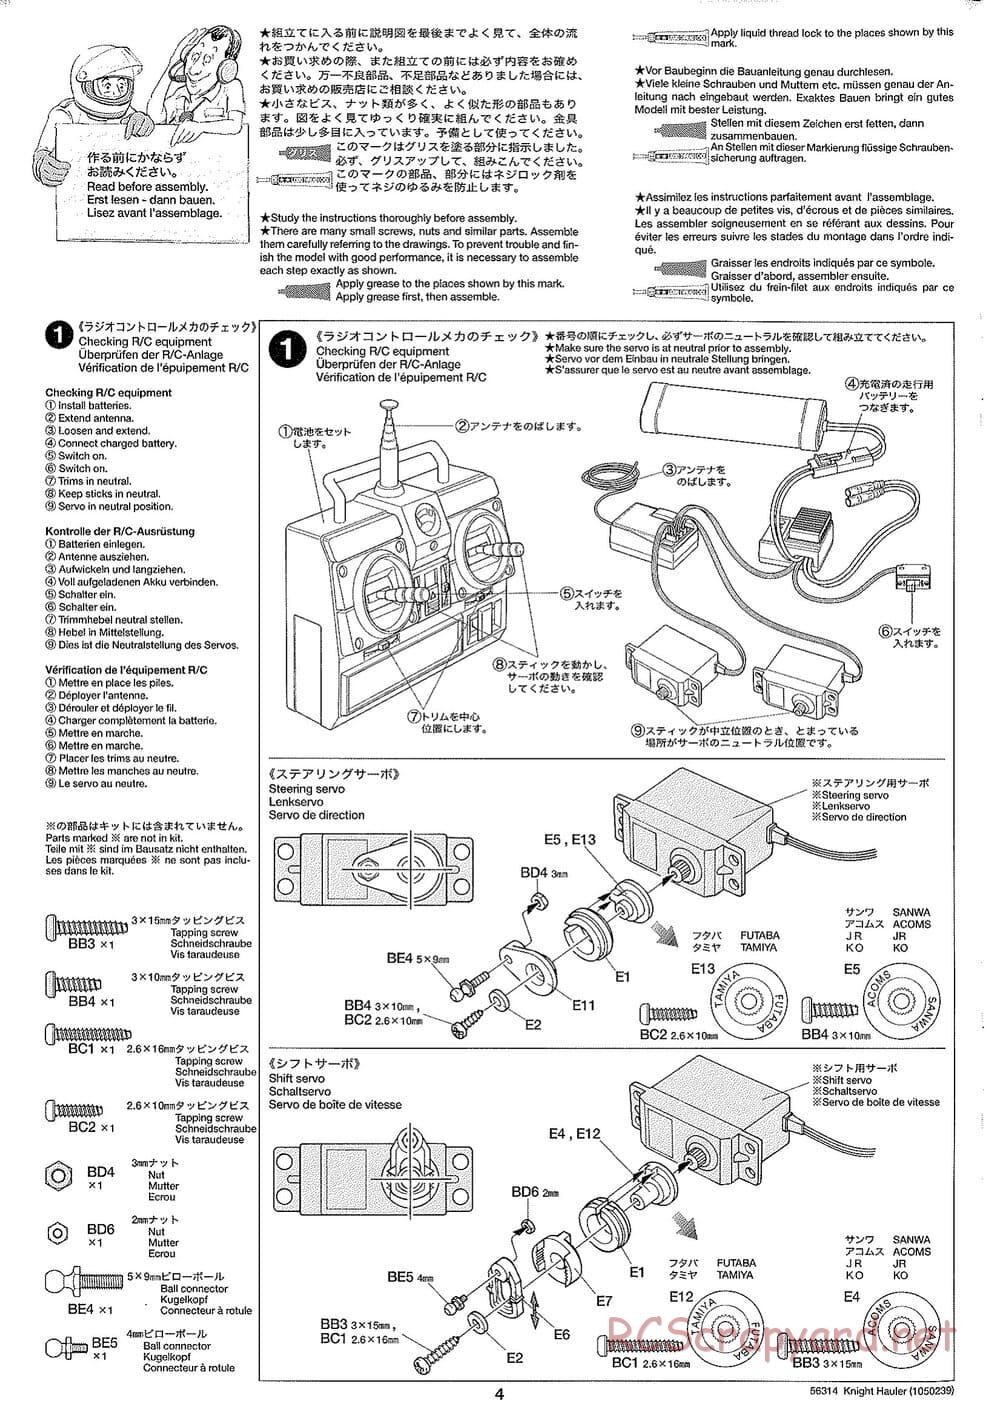 Tamiya - Knight Hauler Tractor Truck Chassis - Manual - Page 4